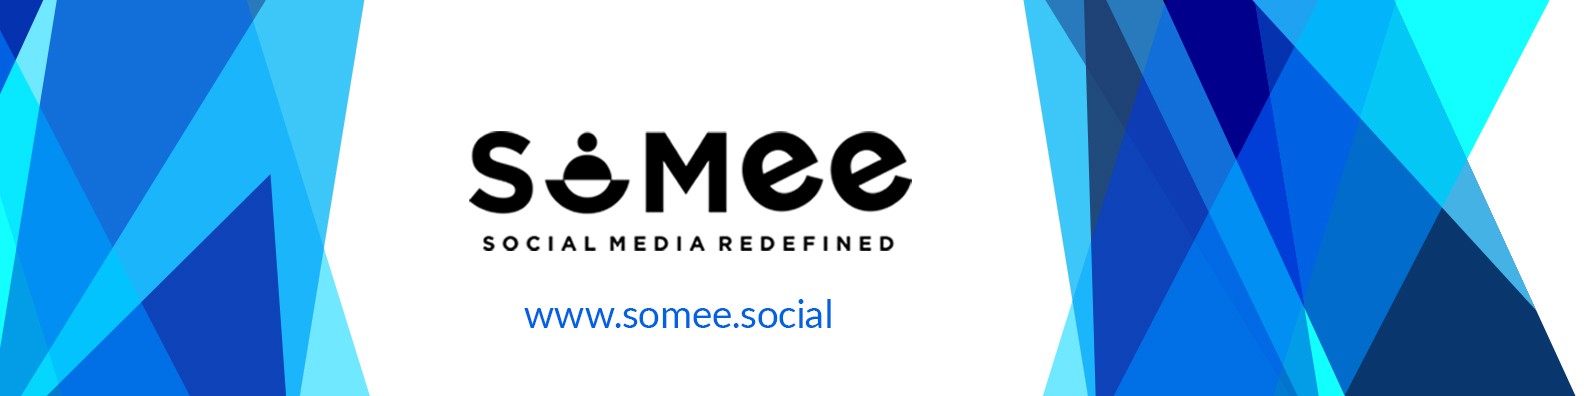 SoMee-Social Media Redefined | LinkedIn